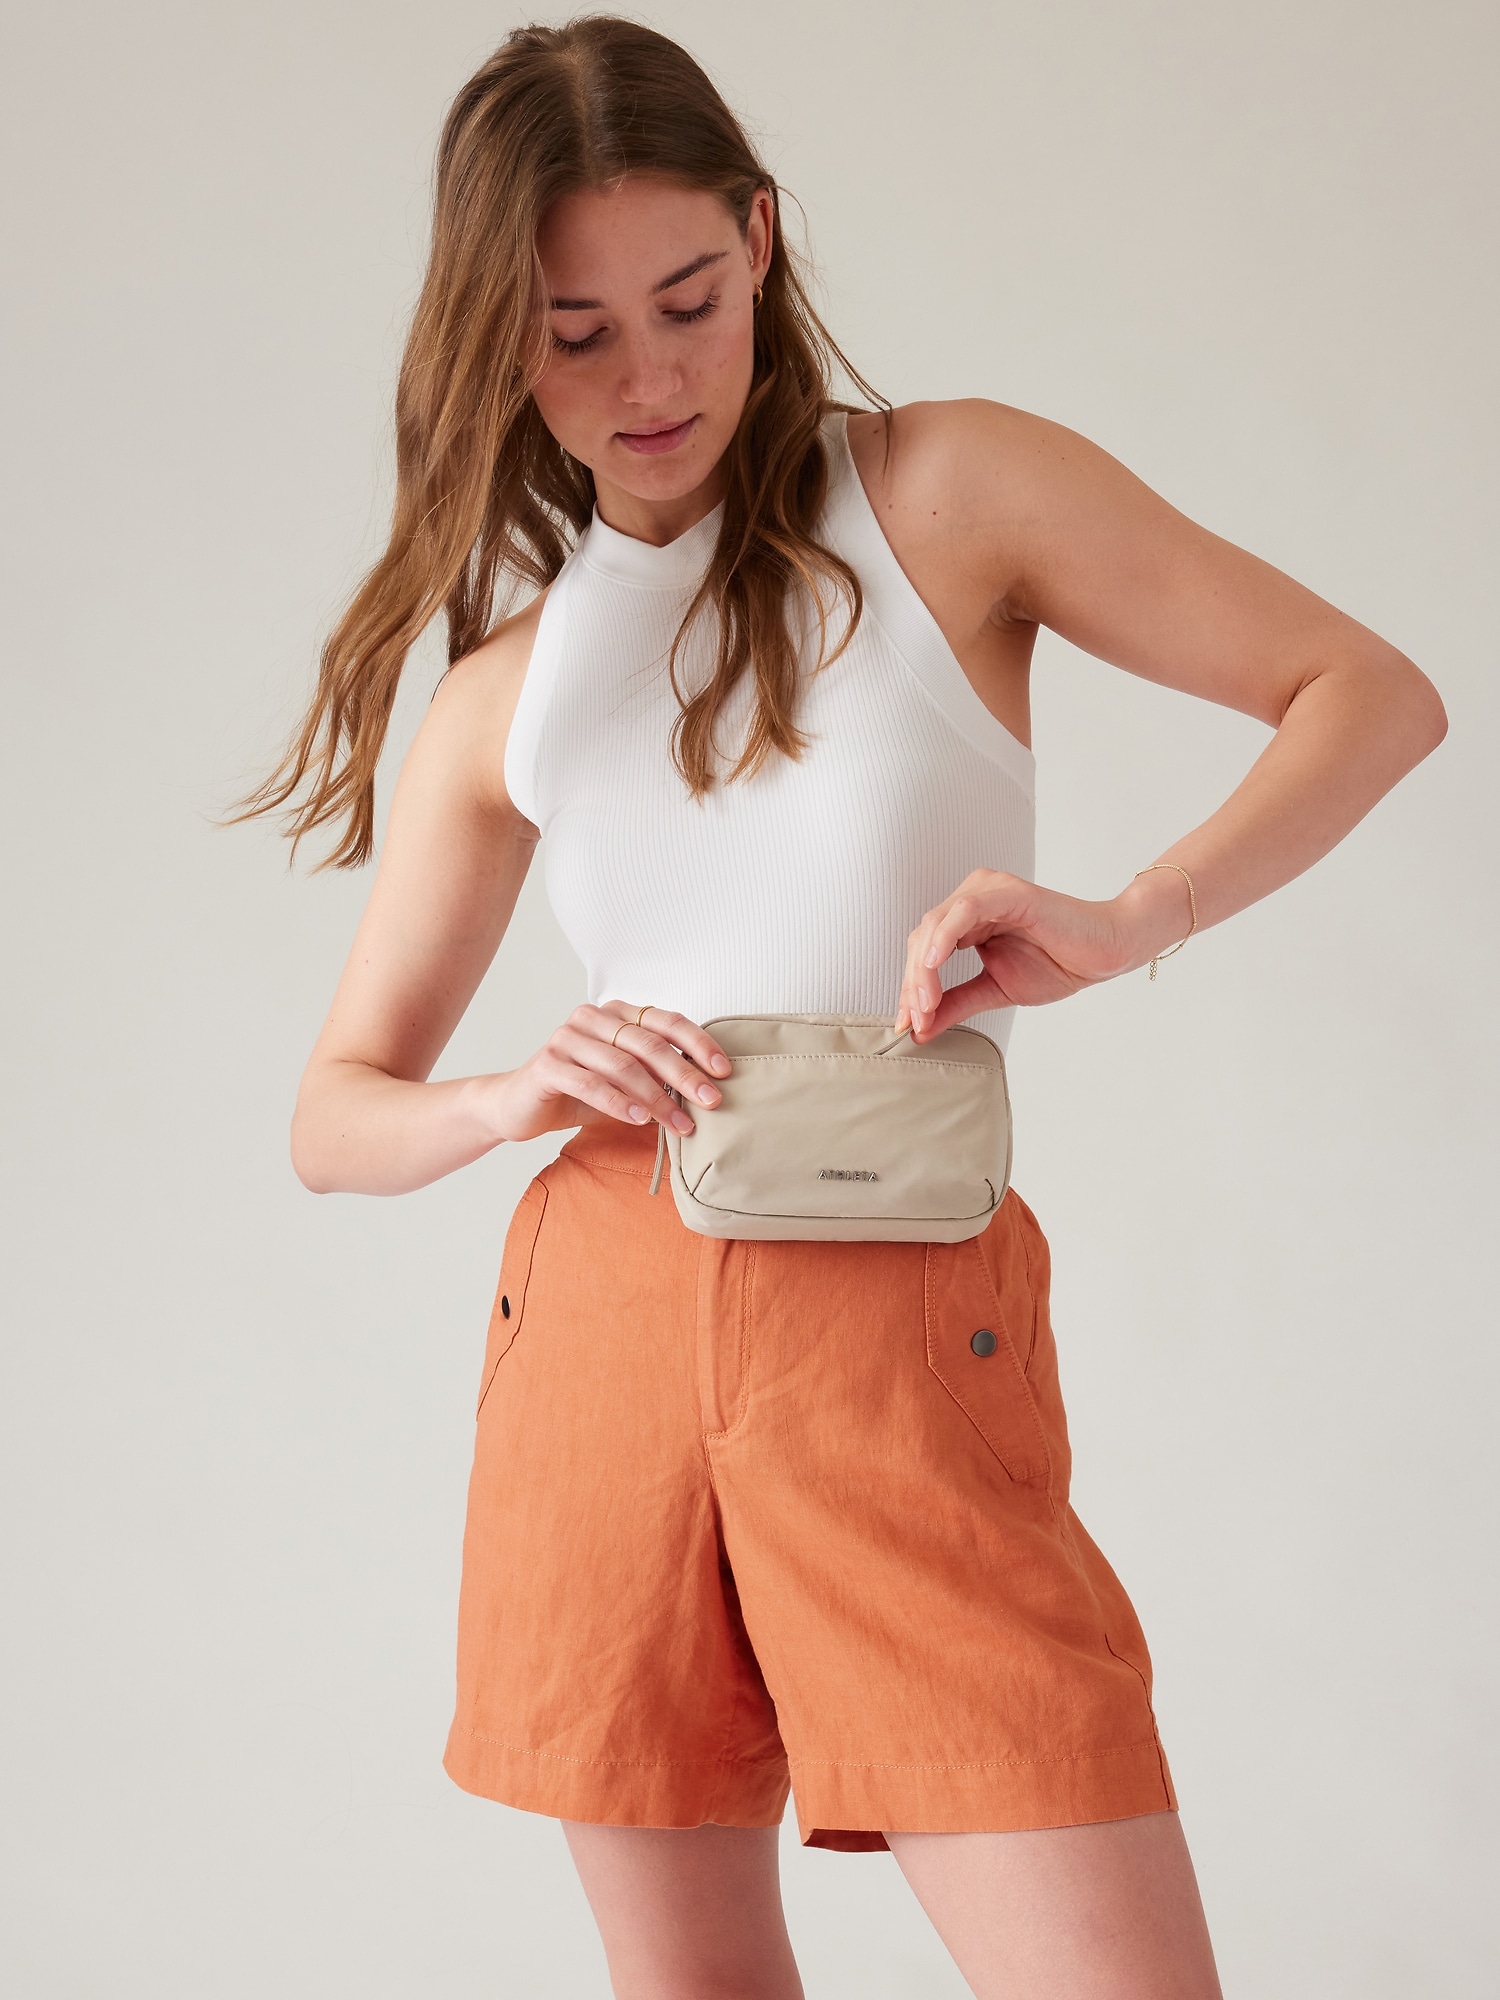 Fanny Pack in Silk Napa Leather Belt Bag Crossbody -  Canada